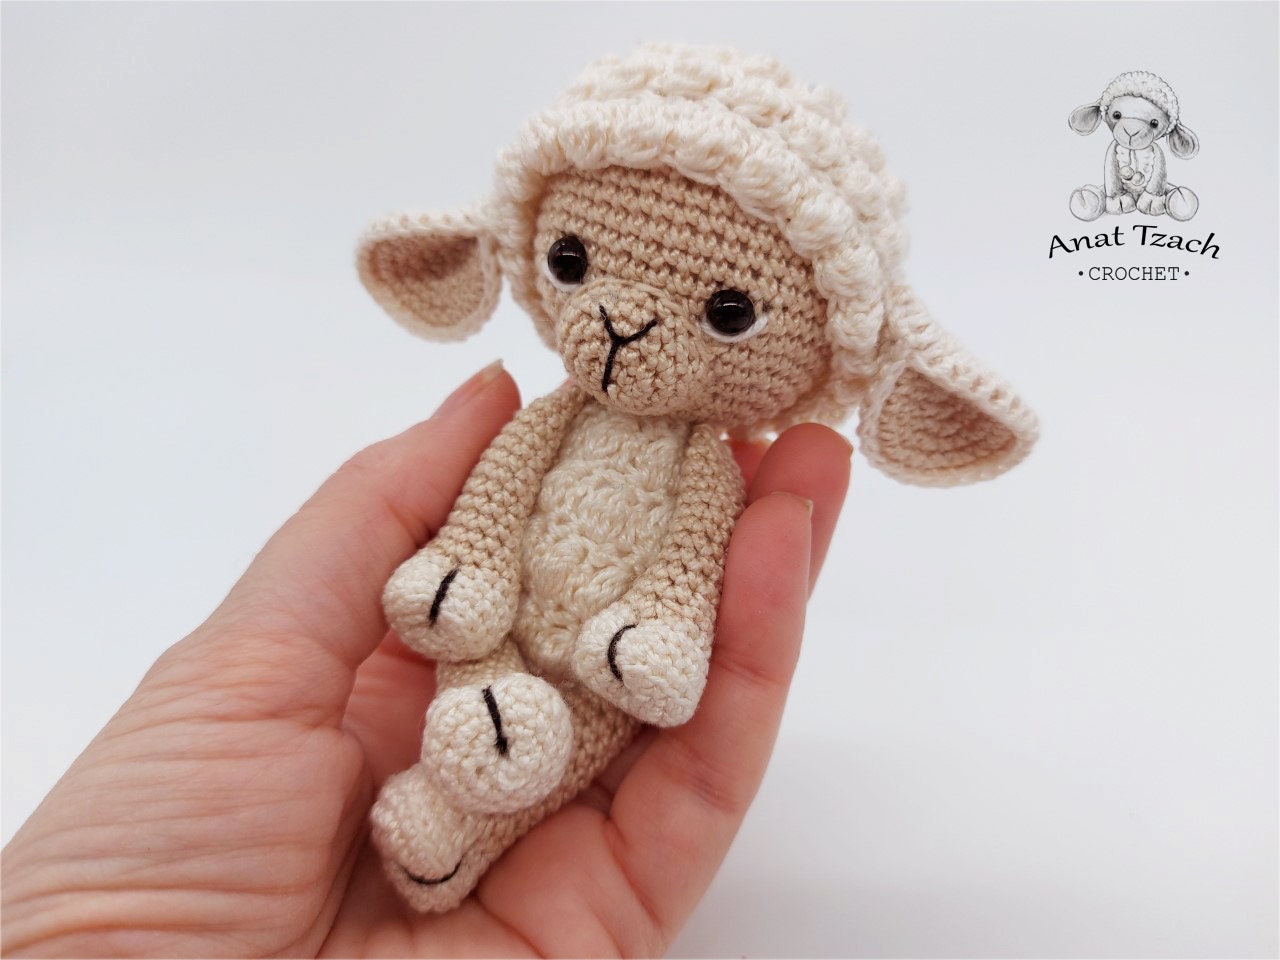 Kawaii Crochet Garden Review - The Loopy Lamb